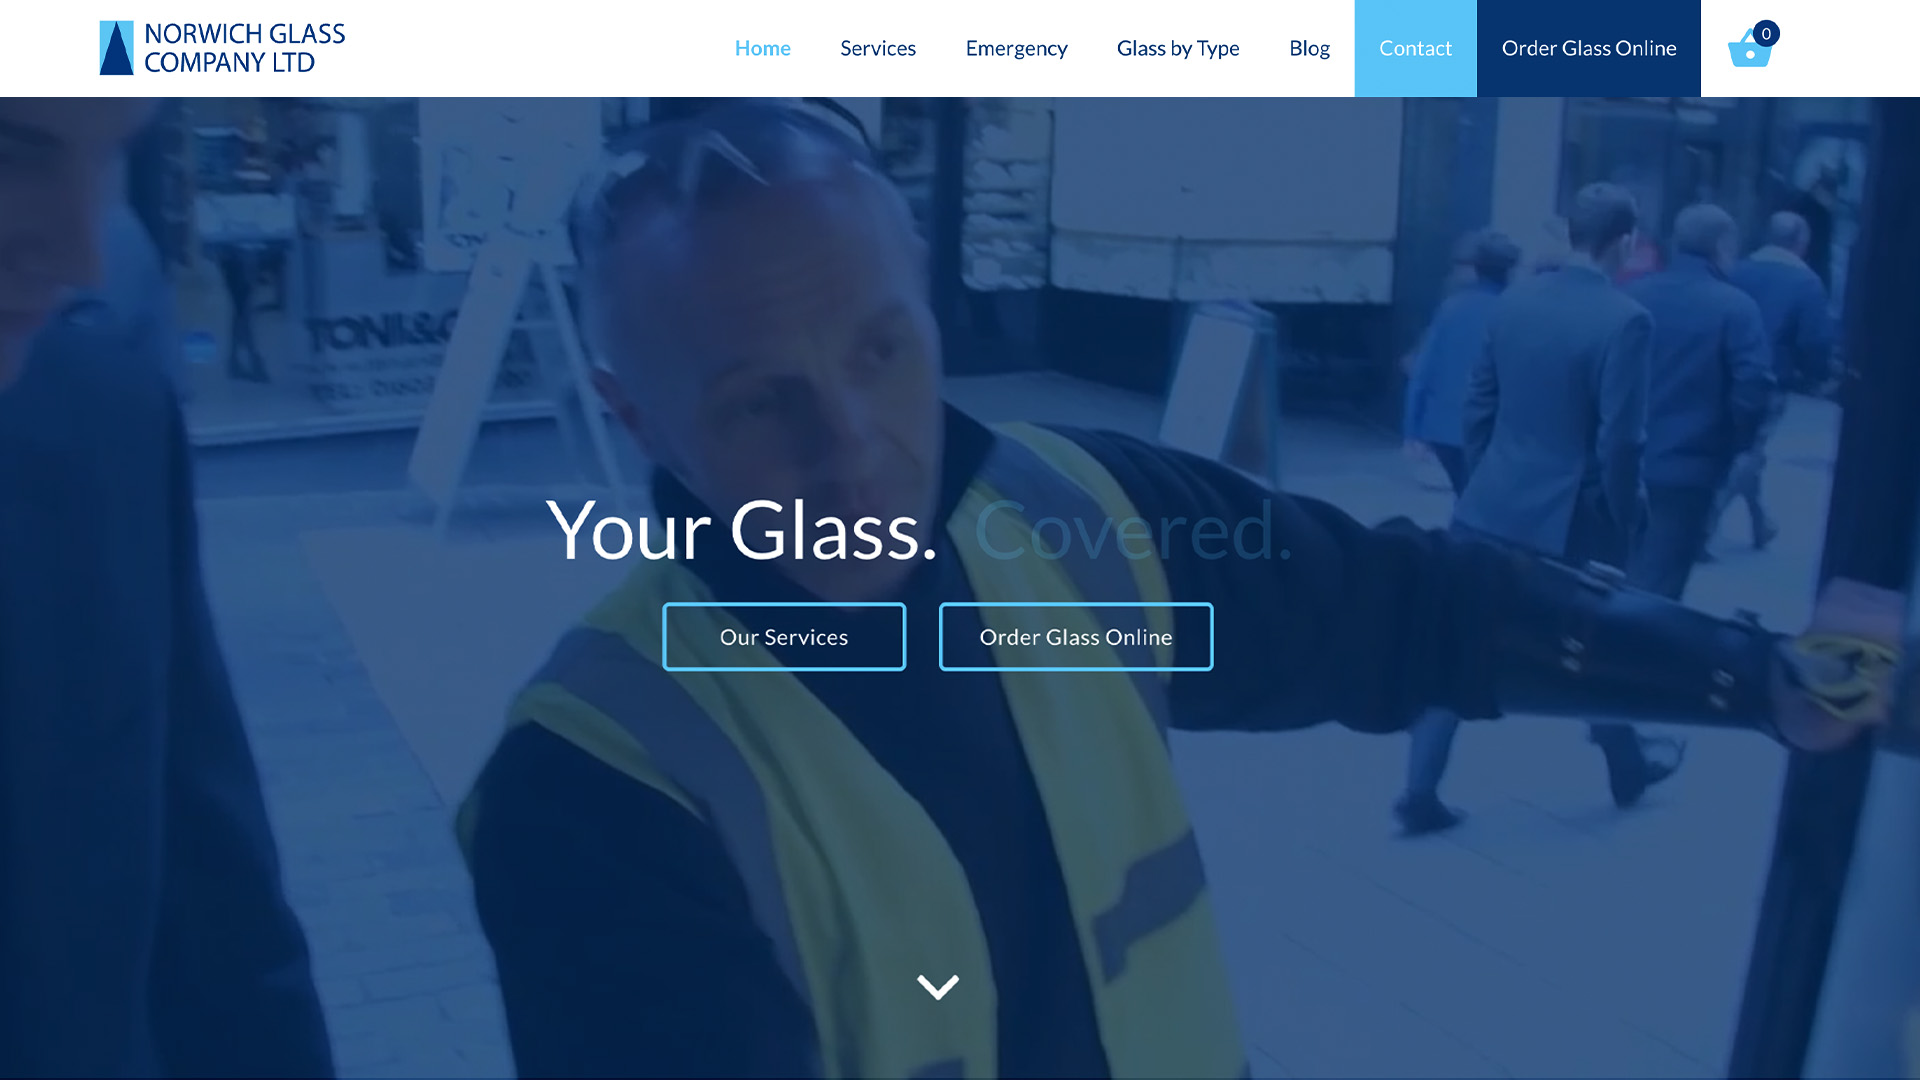 Norwich Glass homepage